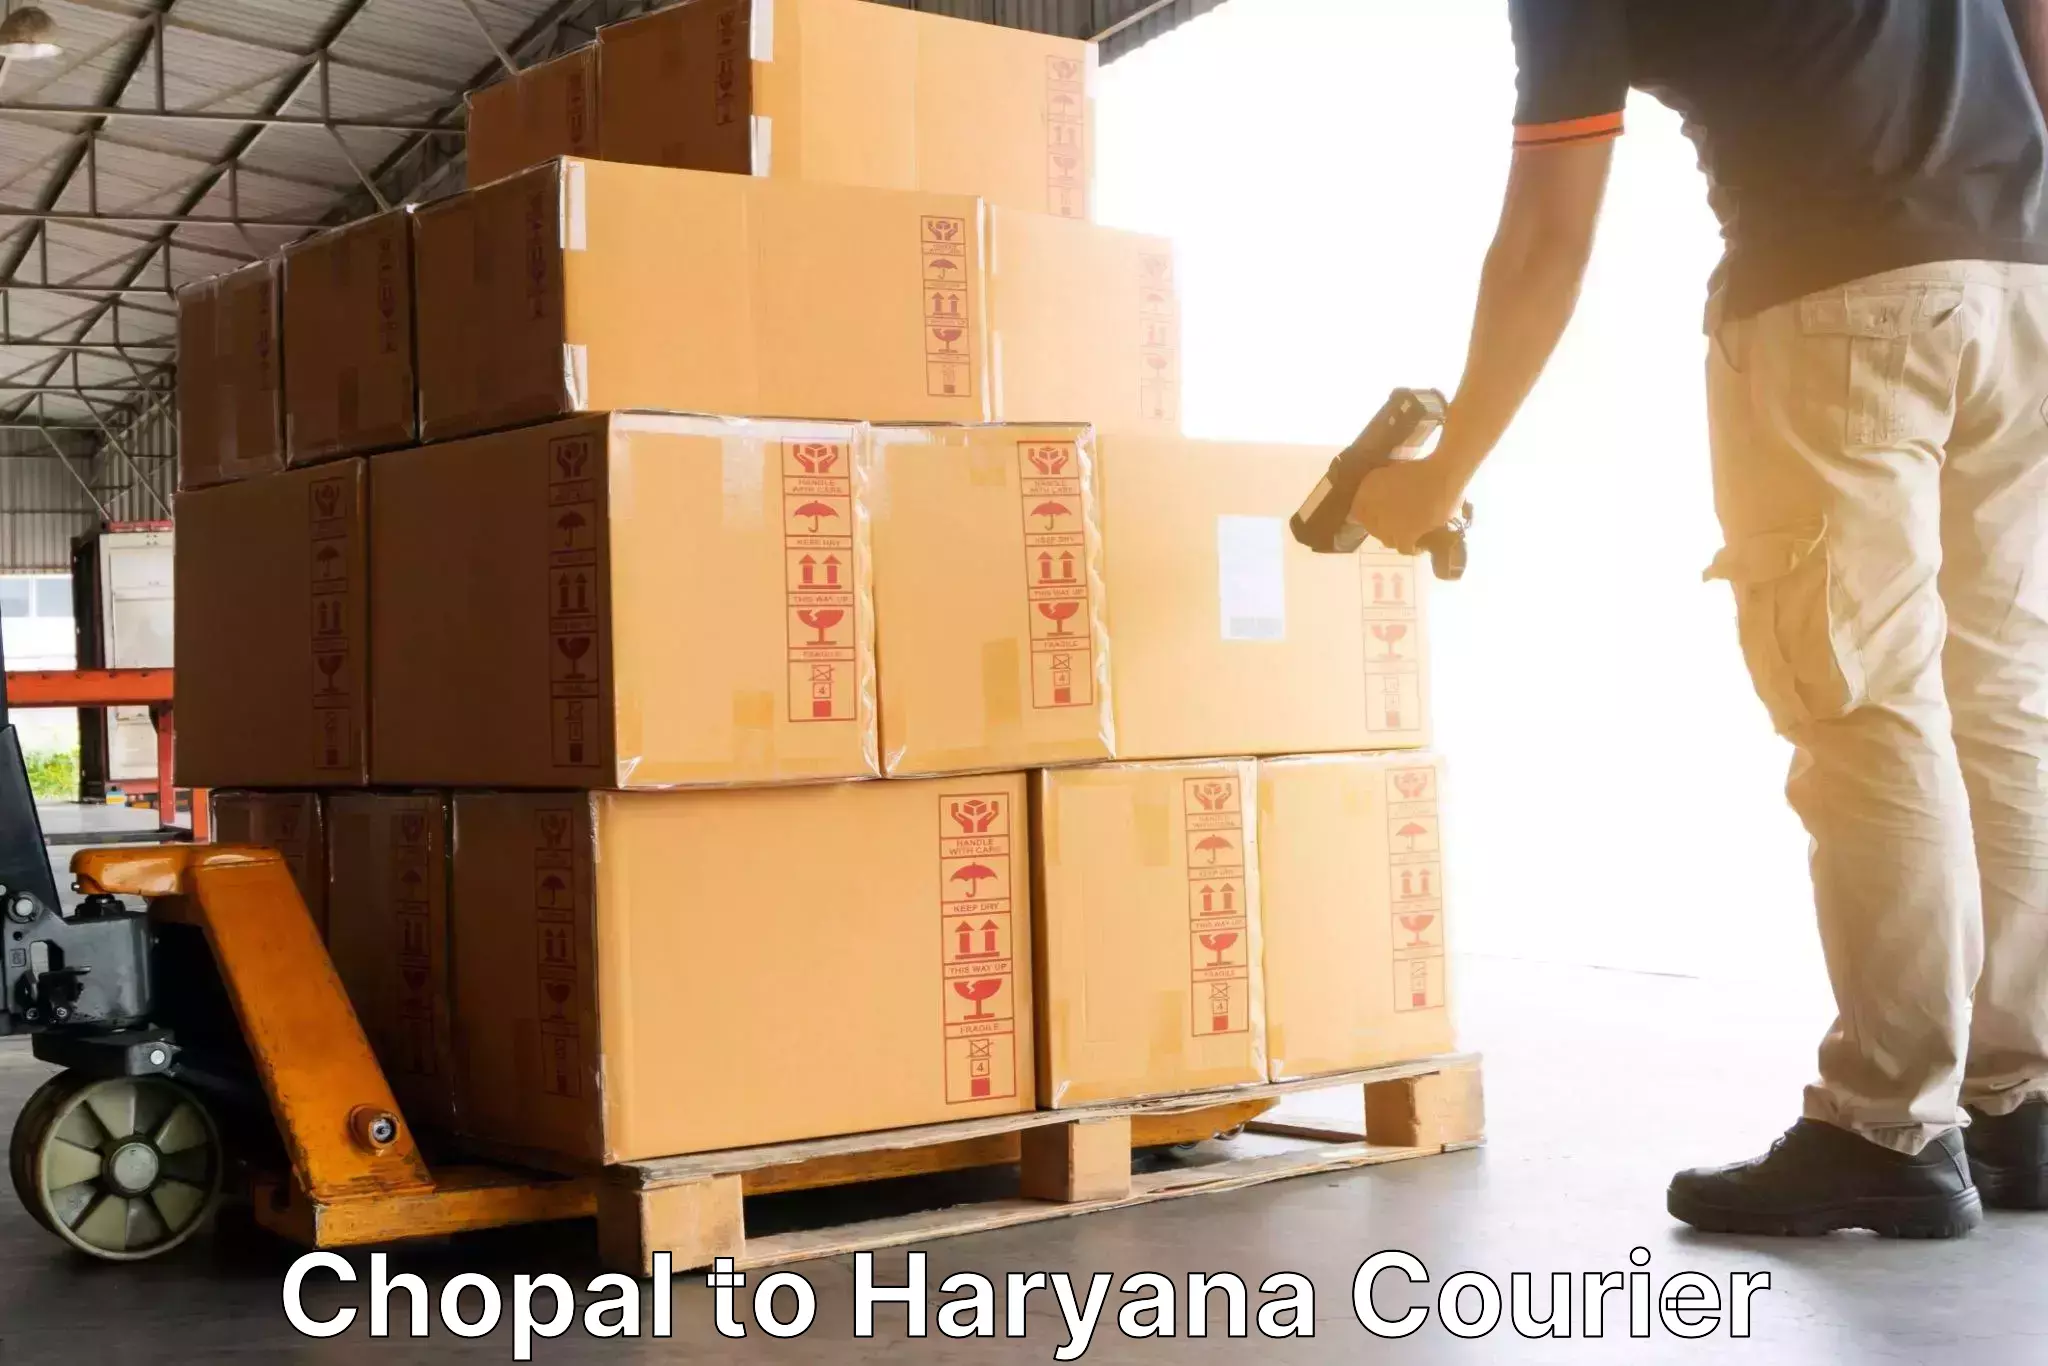 Courier insurance Chopal to Chaudhary Charan Singh Haryana Agricultural University Hisar